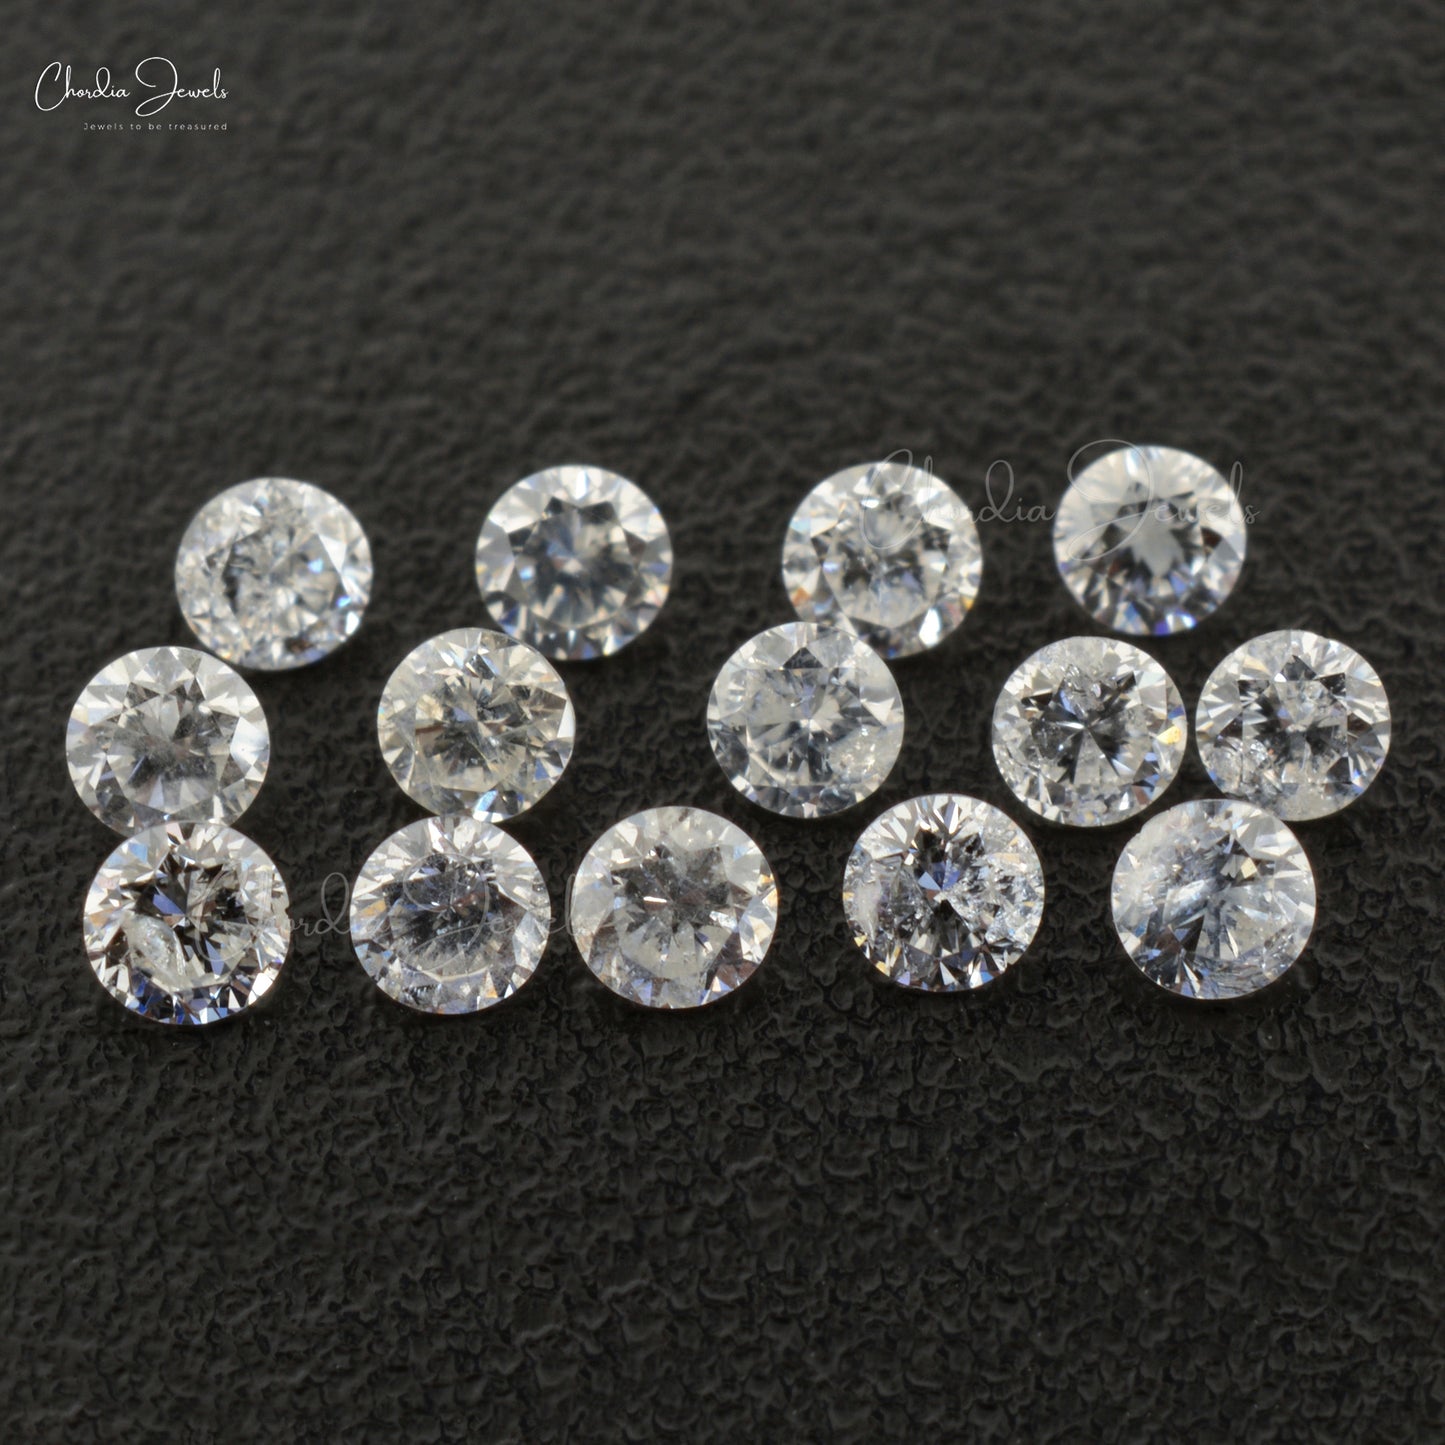 Load image into Gallery viewer, White Diamond I1-I2 / G-H Round Brilliant Cut 1.3MM Precious Gemstone, 1 Piece
